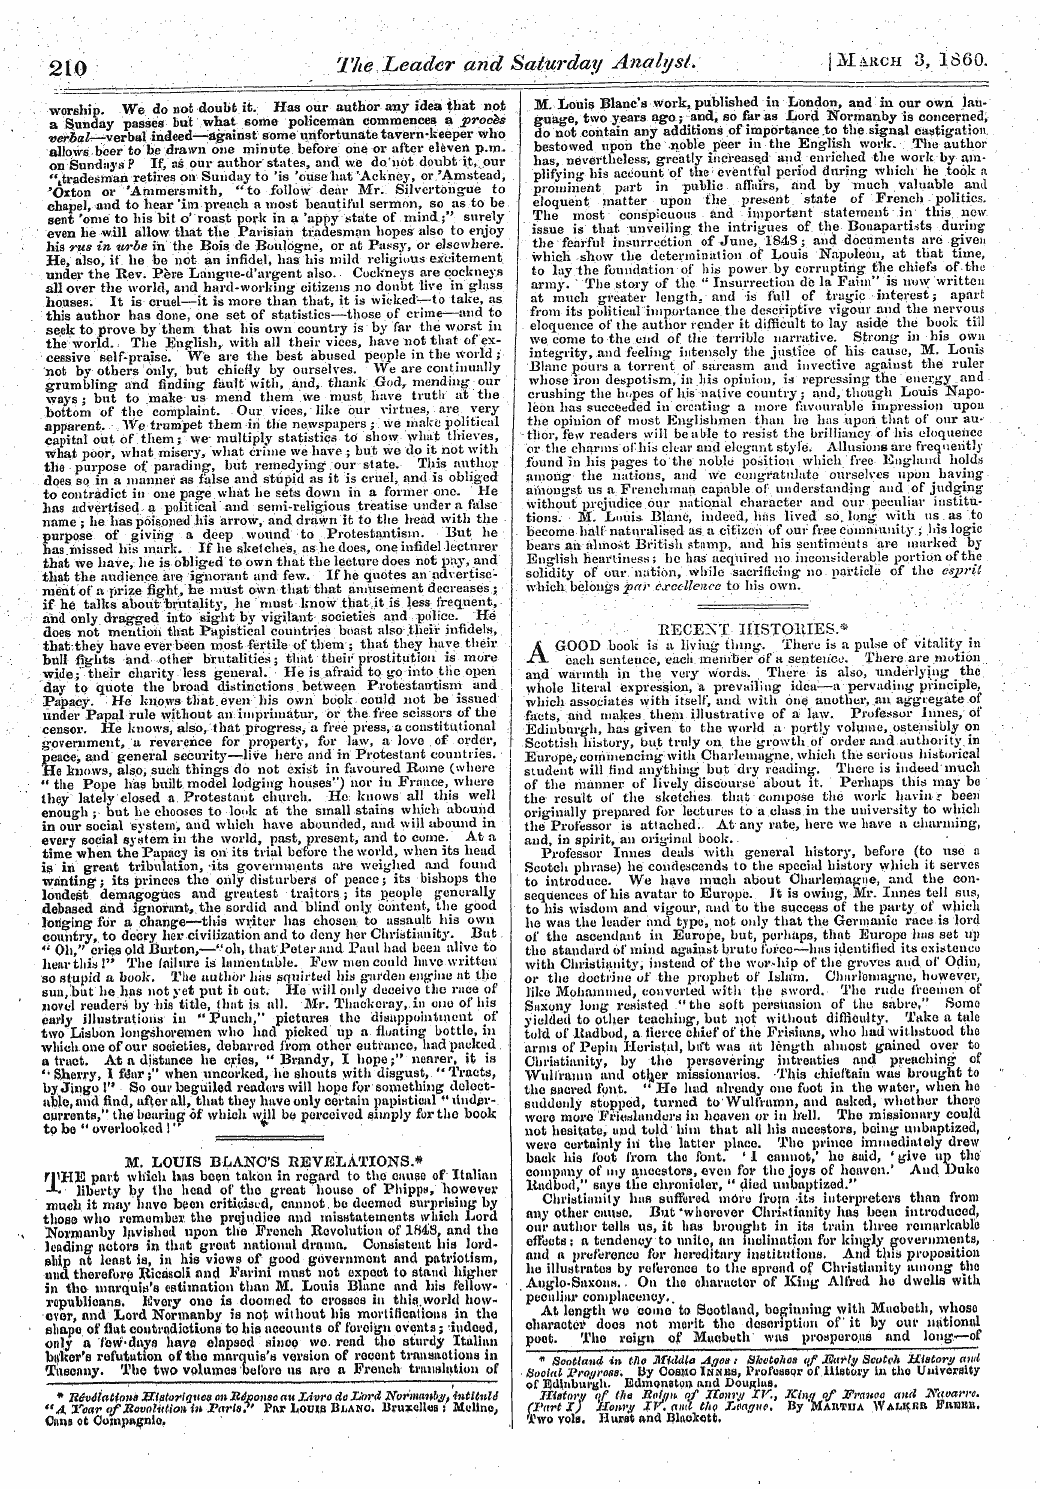 Leader (1850-1860): jS F Y, 2nd edition - I F * Jidvdtationa Ttifiloriqxiev On Res...